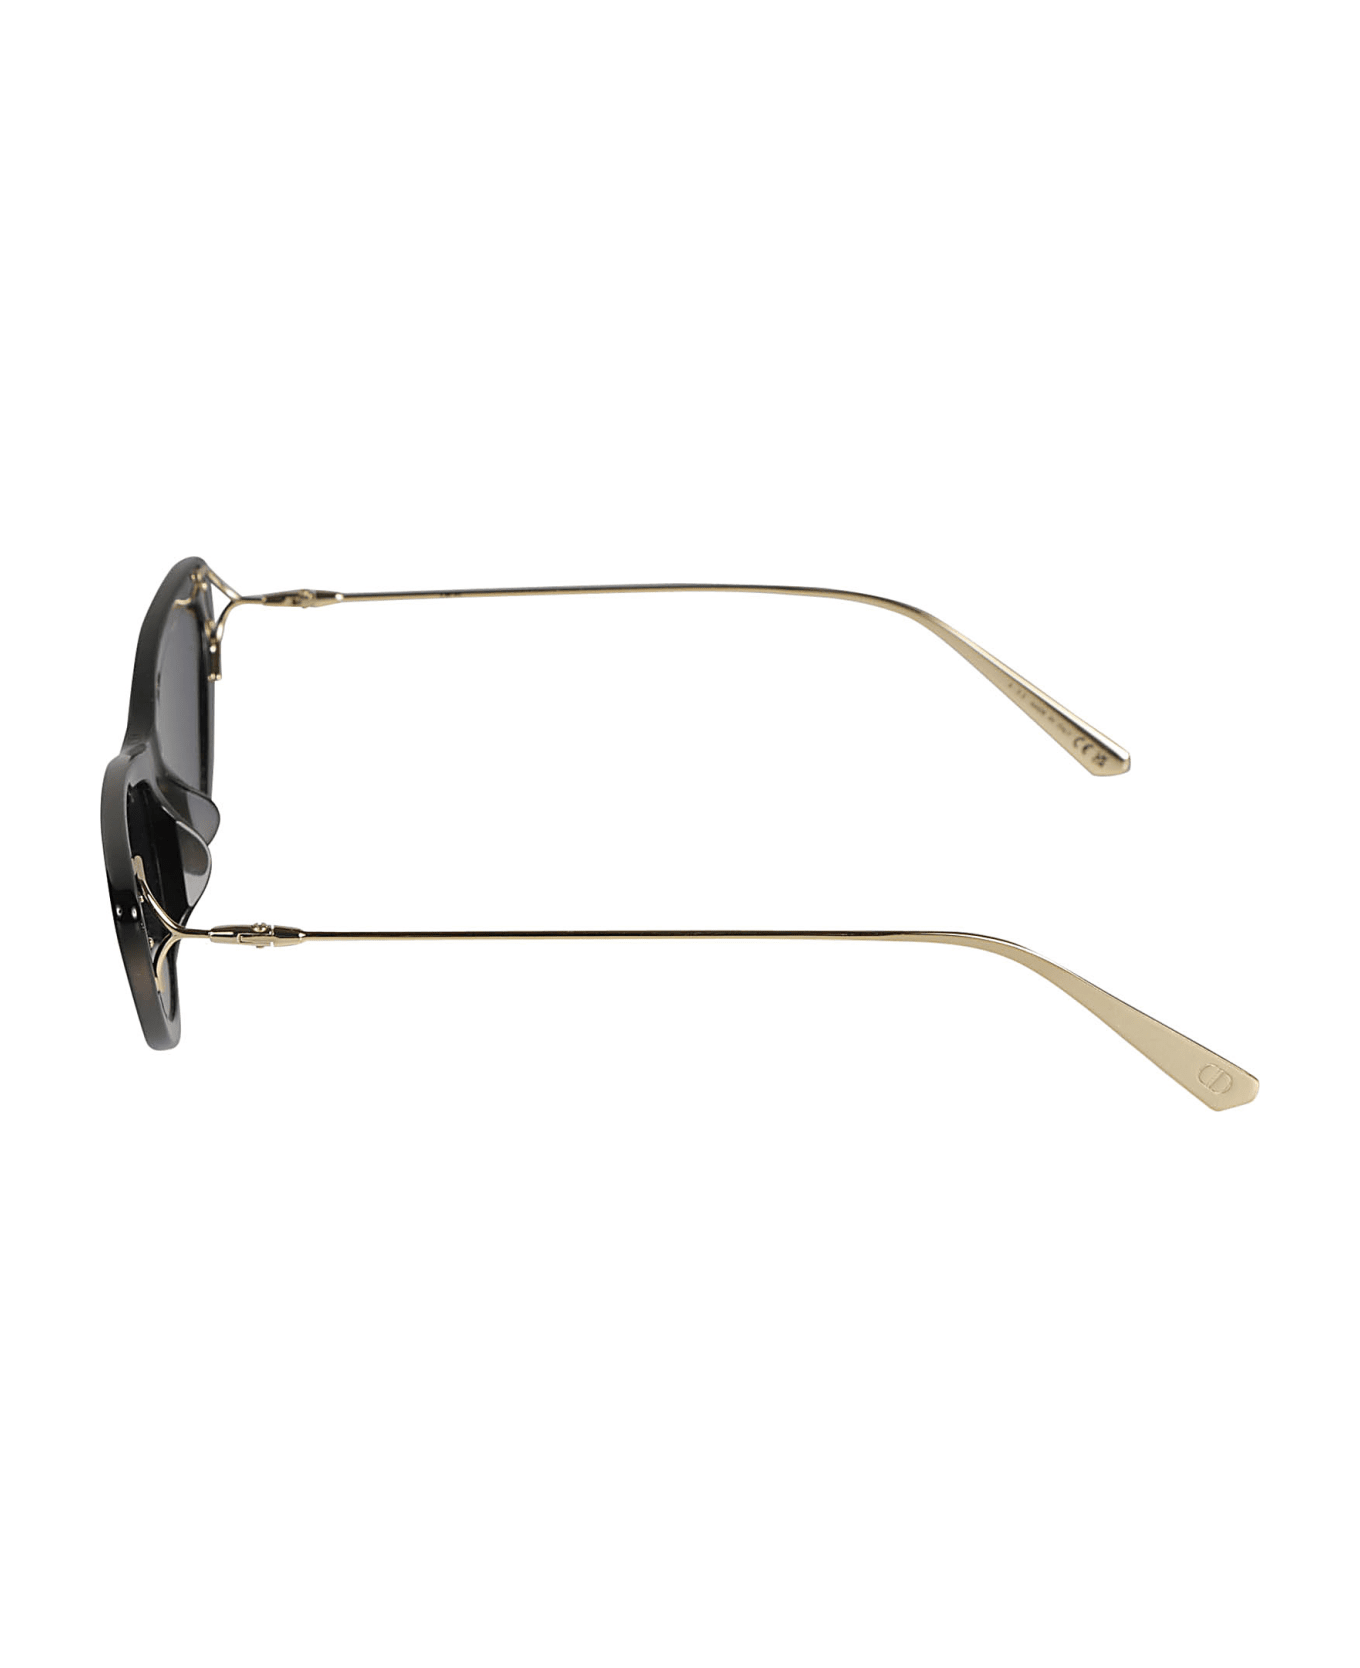 Dior Eyewear Missdior Sunglasses - 12b0